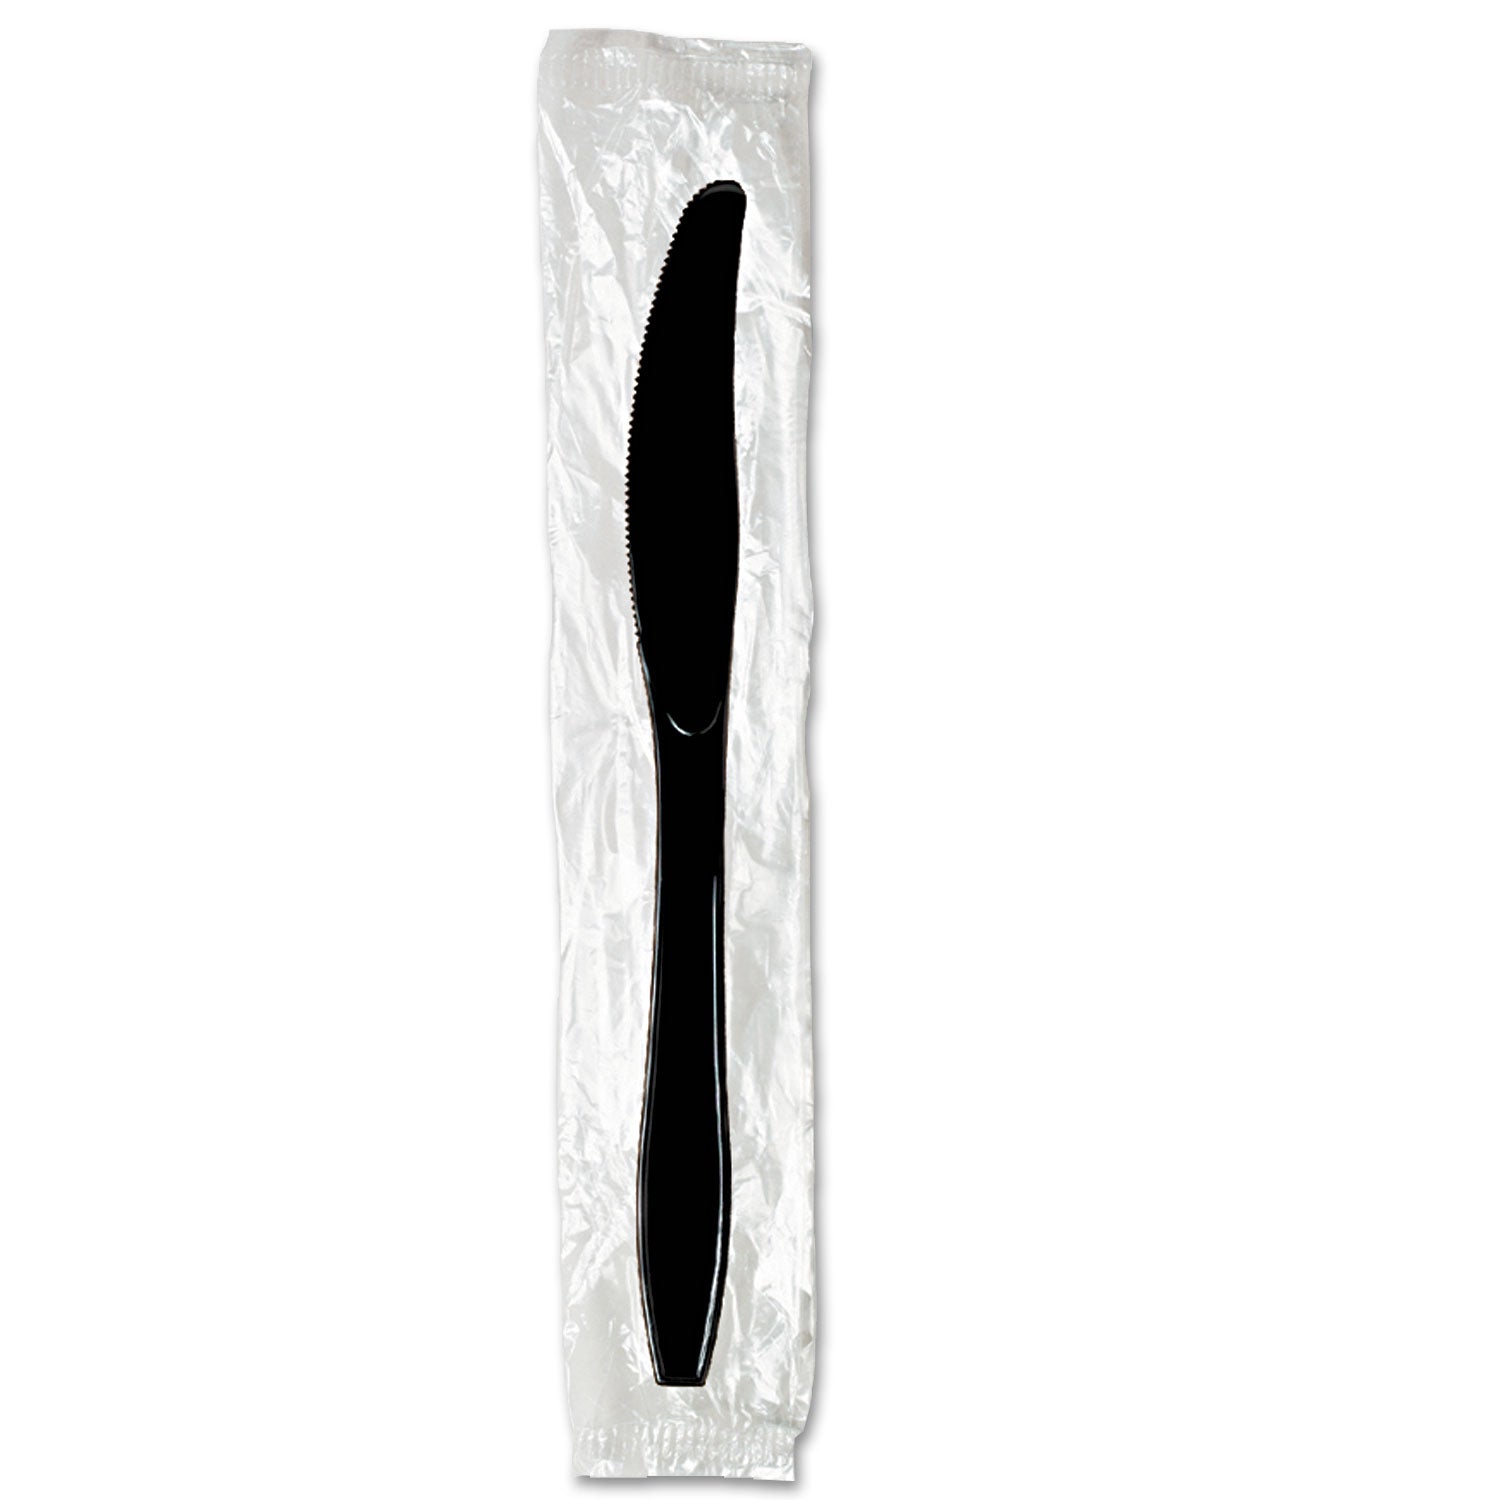 Individually Wrapped Heavyweight Knives, Polystyrene, Black, 1,000/Carton - 